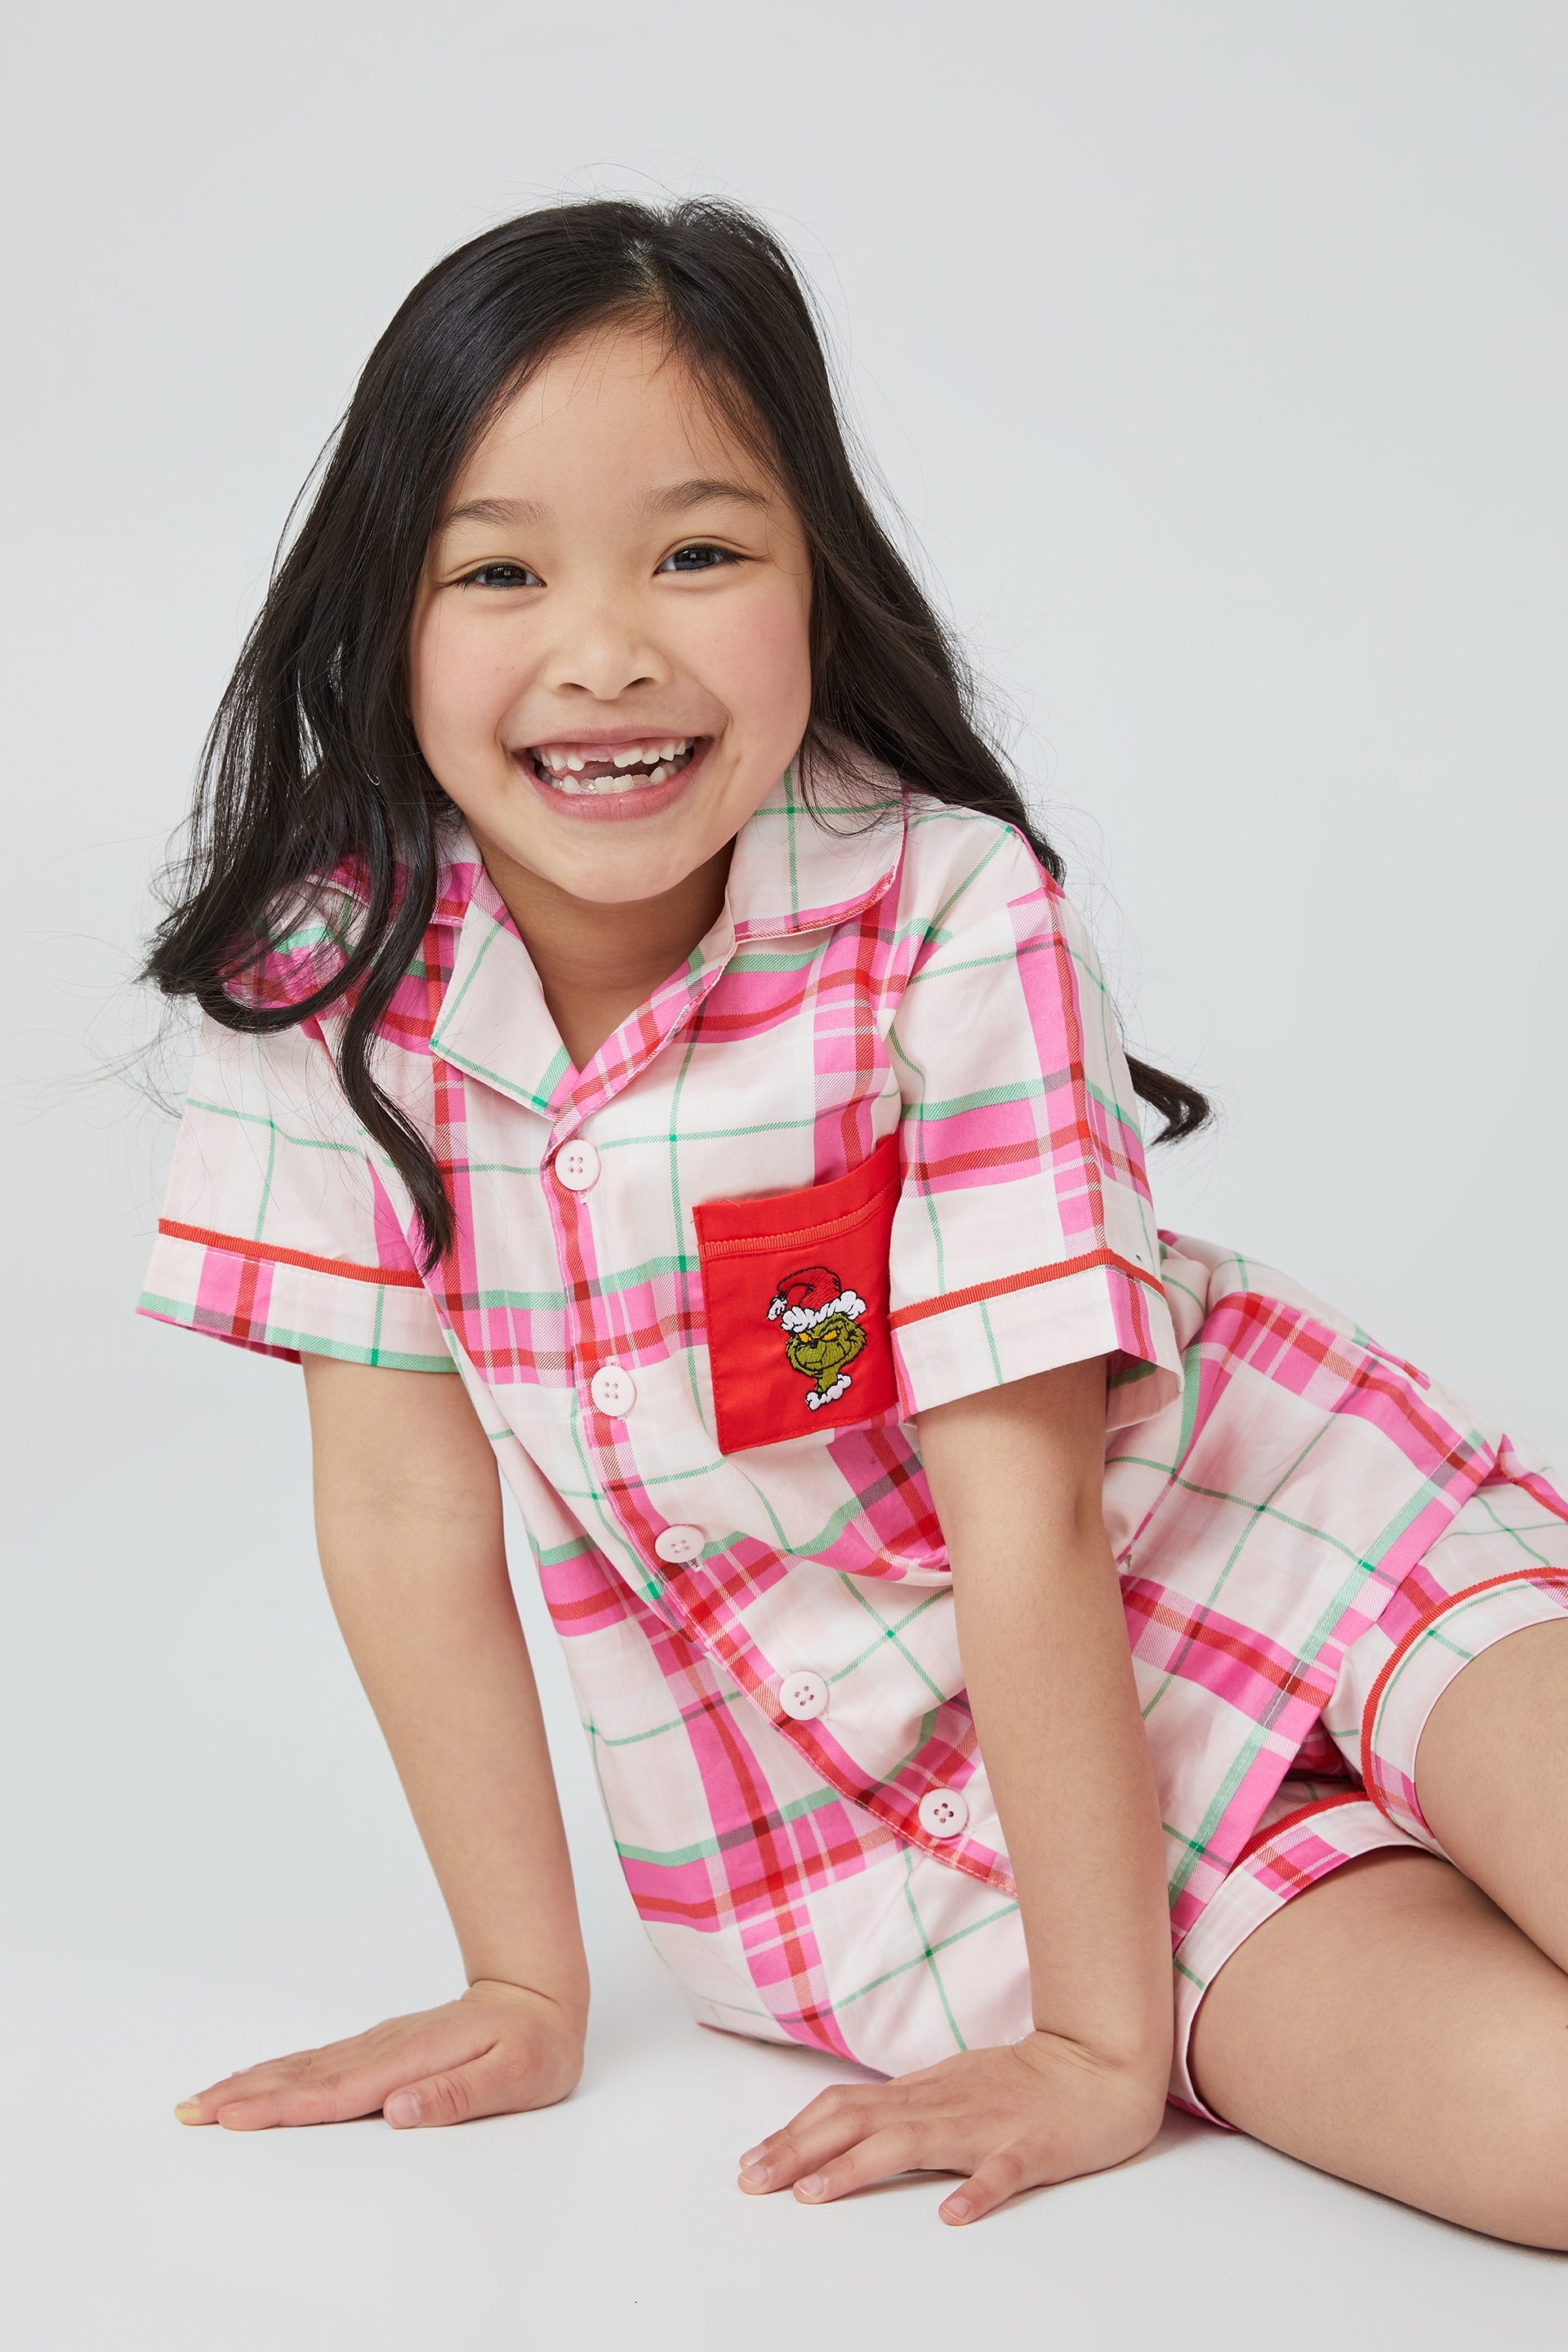 Cotton On Kids - Riley Kids Unisex Short Sleeve Pyjama Set Licensed - Lcn drs crystal pink/the grinch check